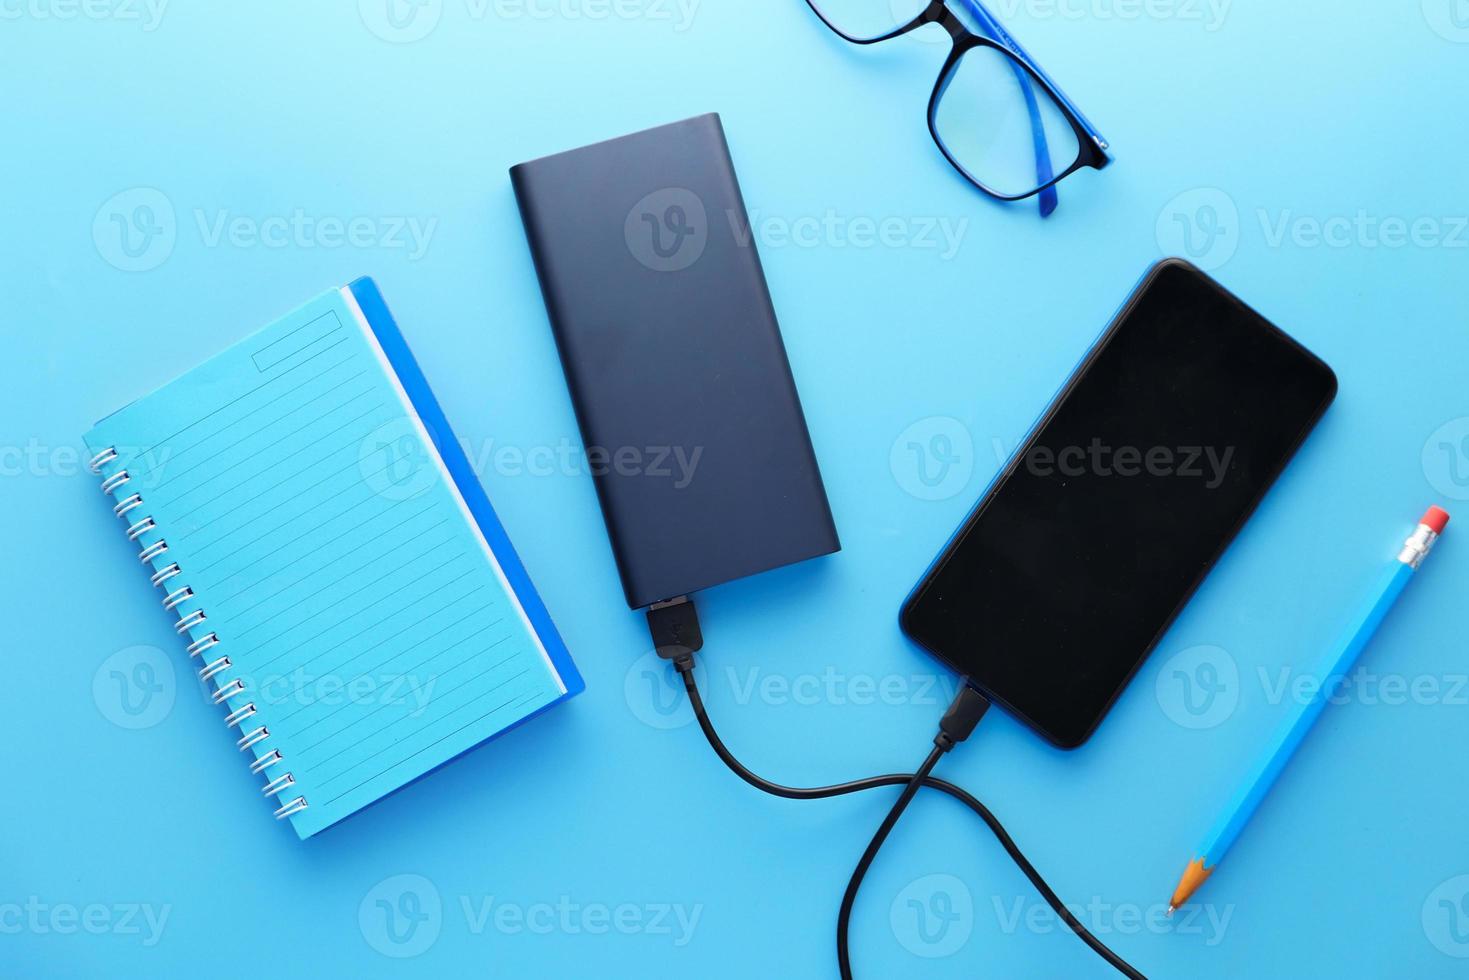 smart telefon charing med power bank på blå bakgrund foto